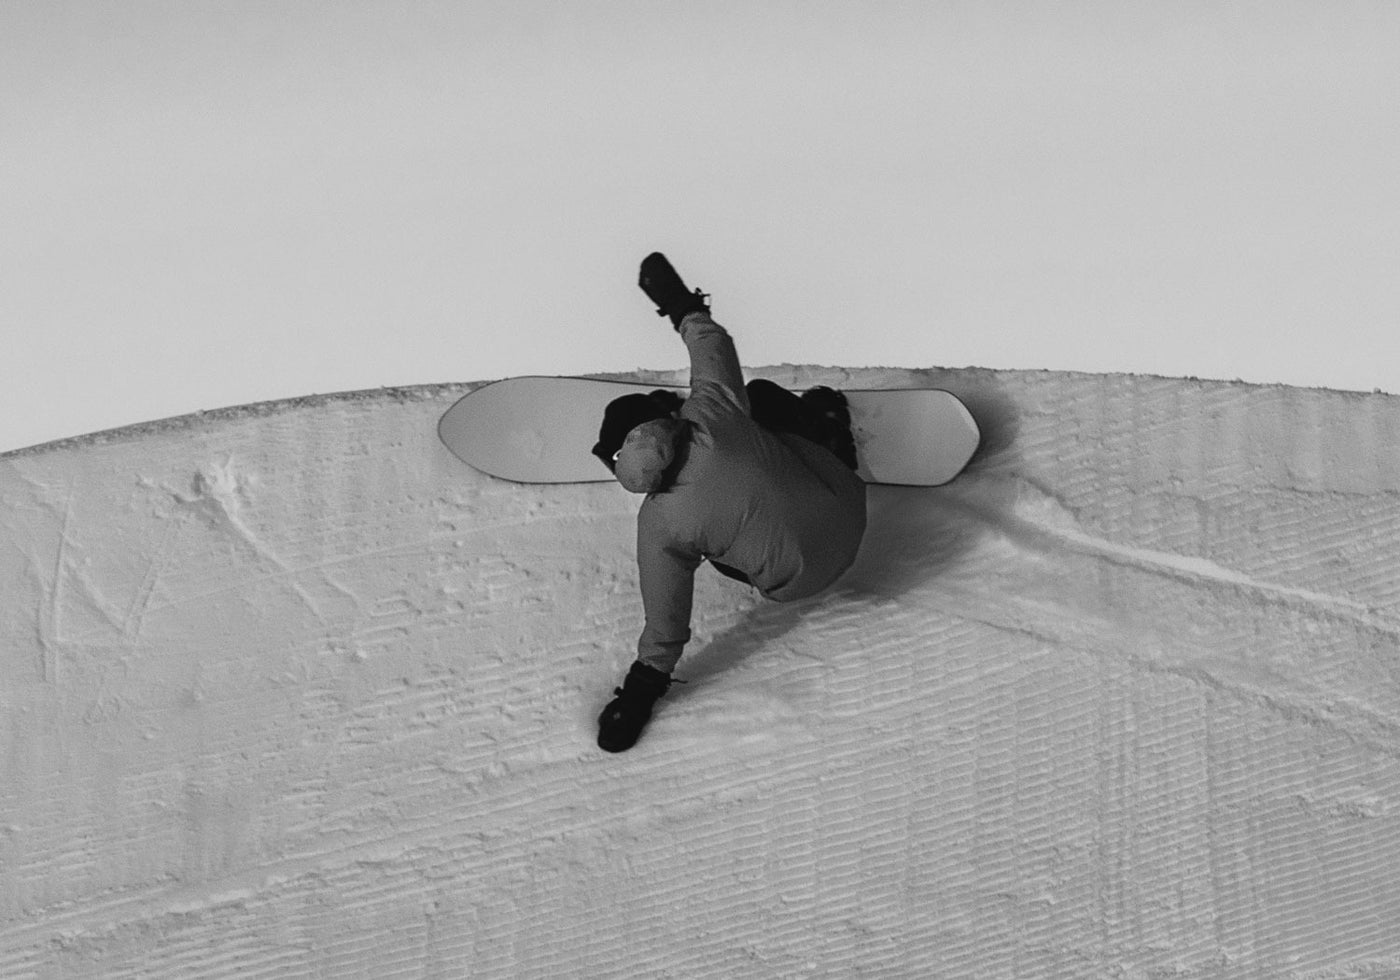 Snowboard KORUA PIN TONIC 2024